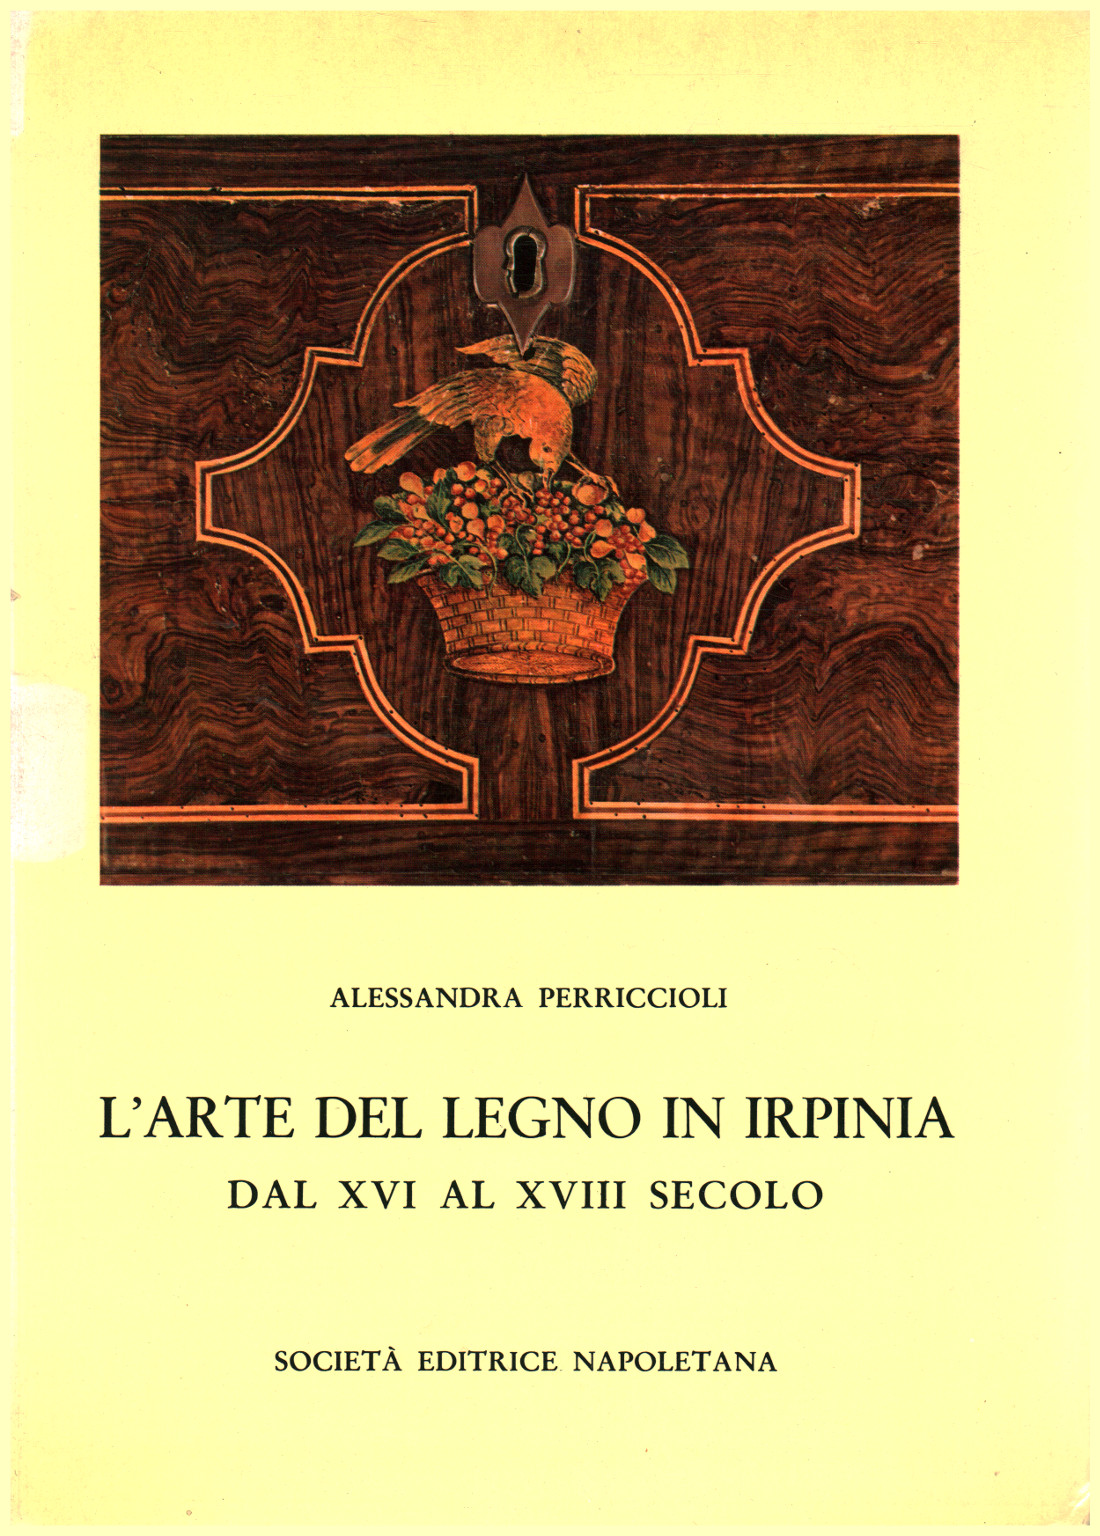 Die Holzkunst in Irpina vom 16. bis 18. Jahrhundert, Alessandra Perriccioli